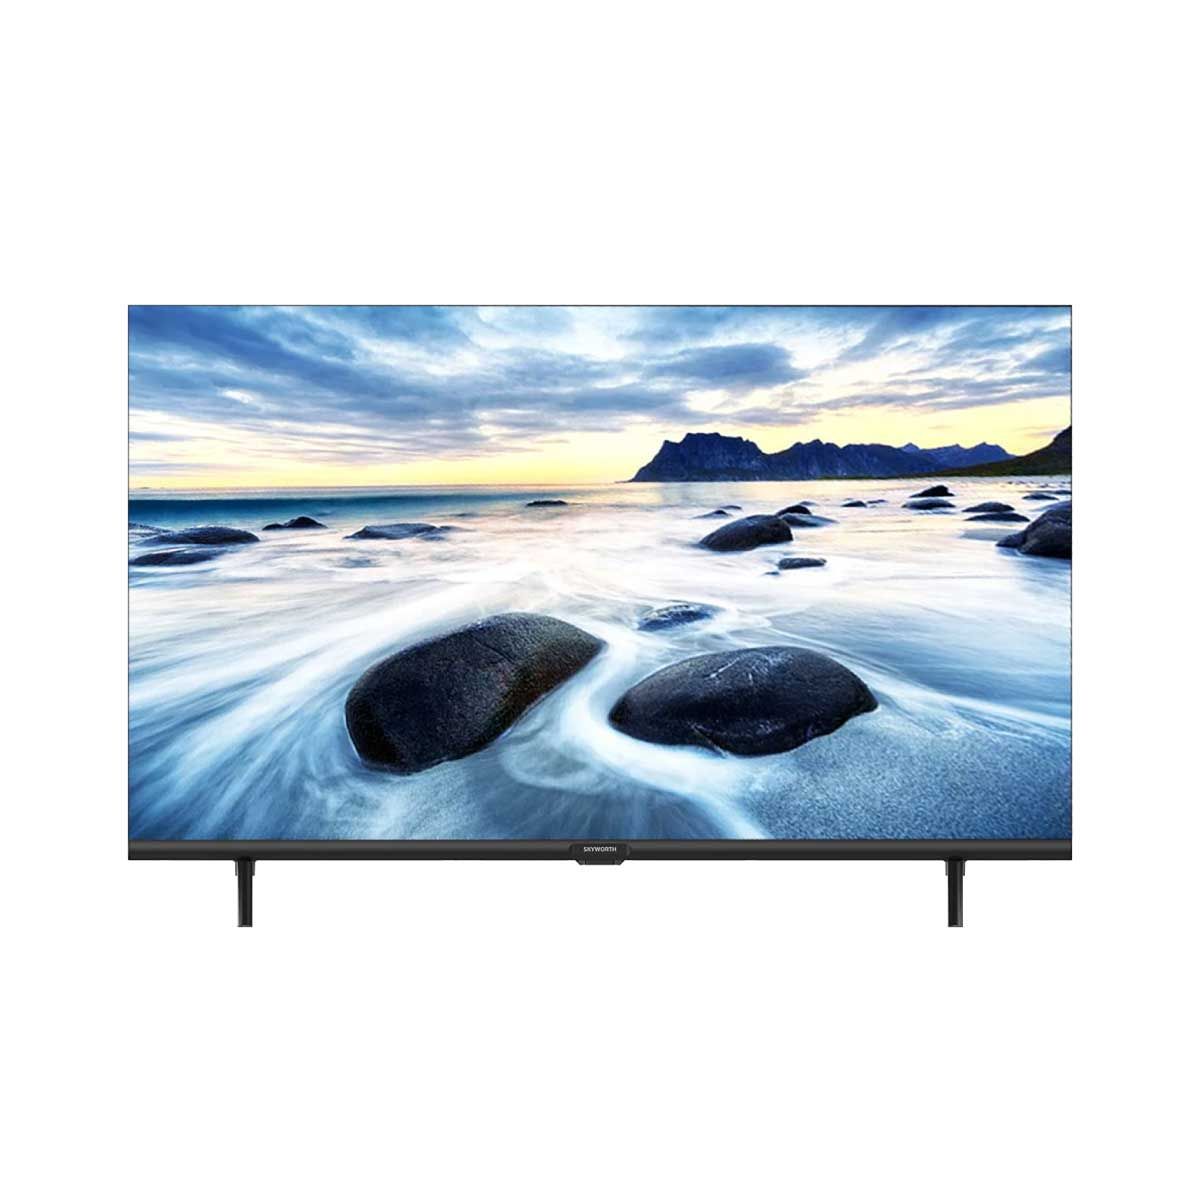 SKYWORTH  LED Smart TV  รุ่น 43STD4000 ดิจิตอลทีวี สมาร์ททีวี 43 นิ้ว